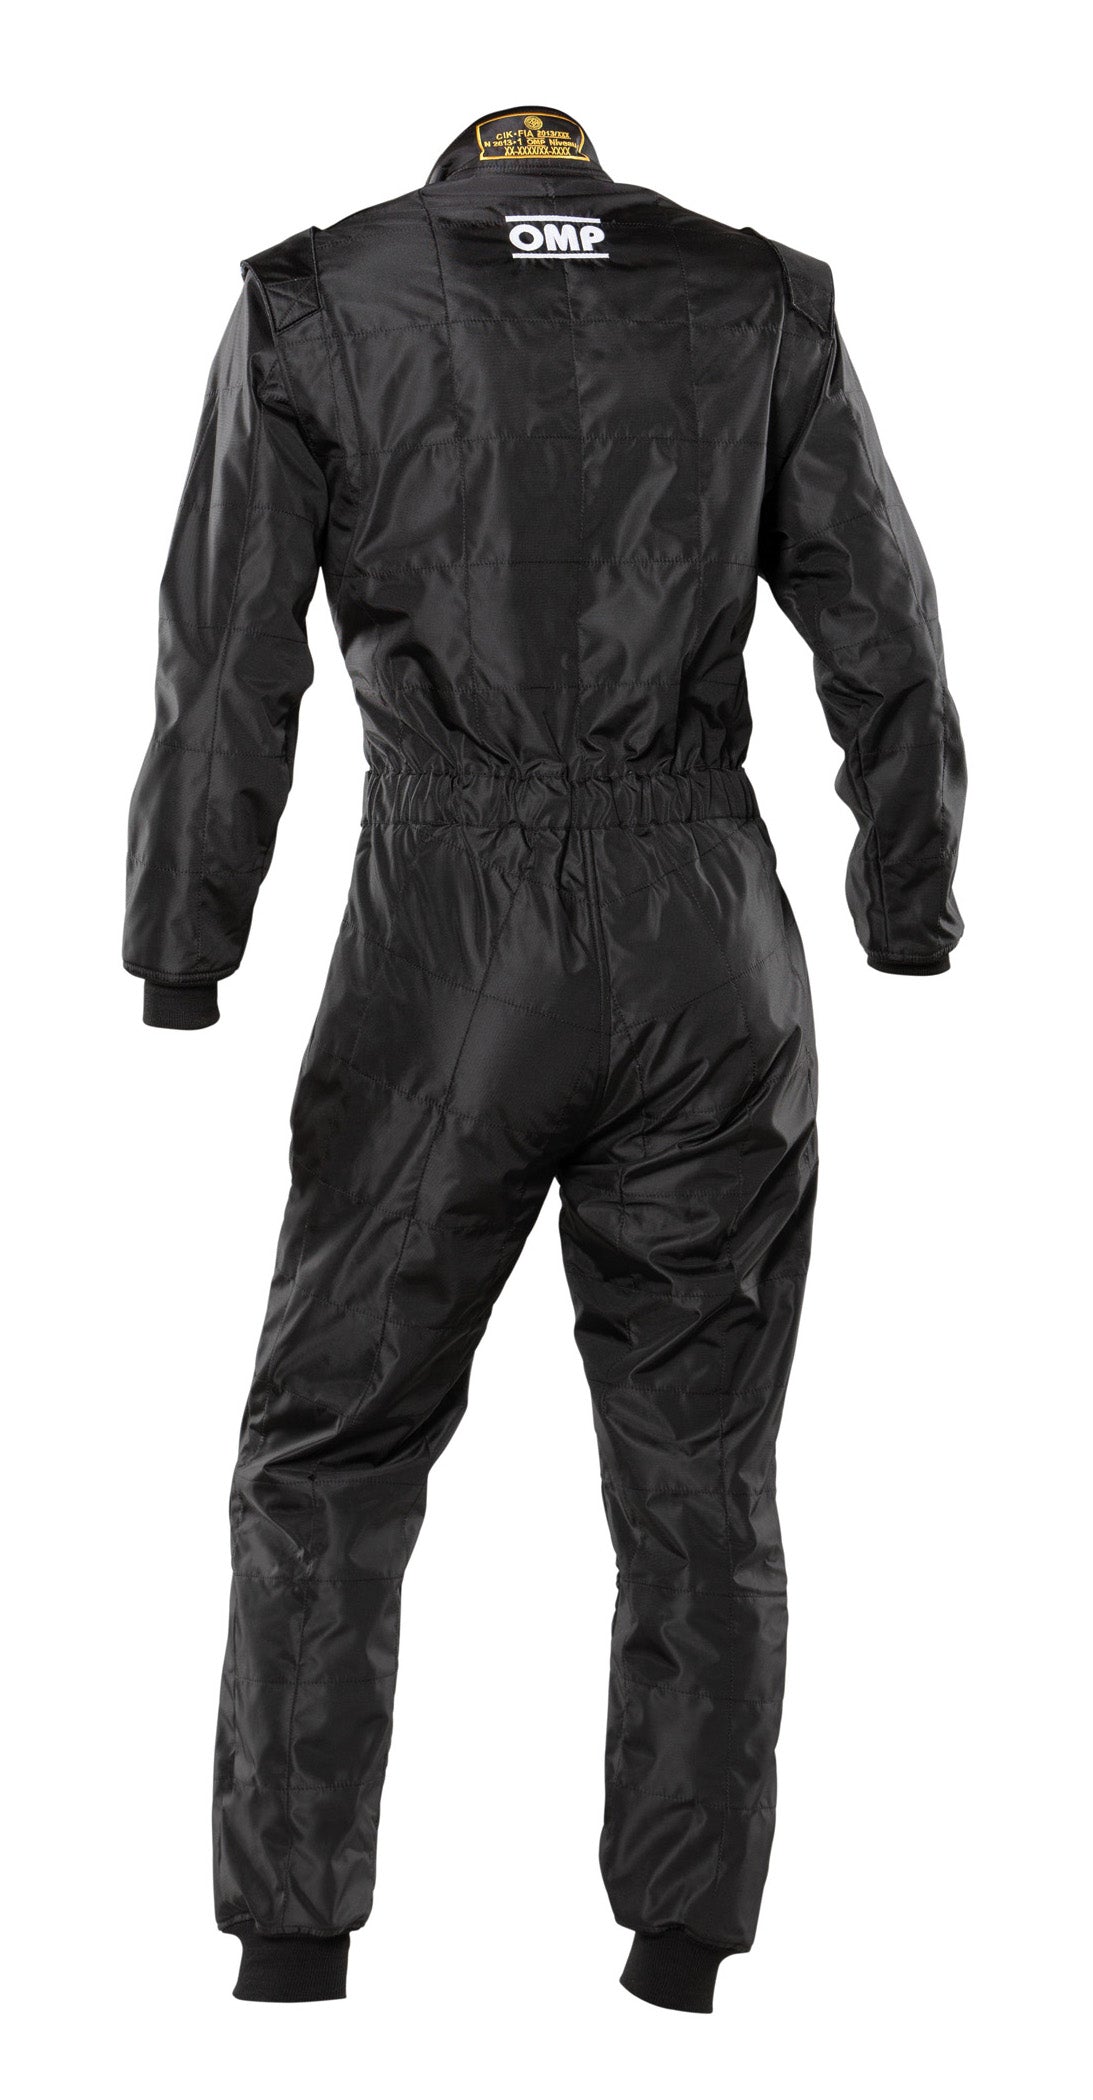 OMP KA0-1728-A01-071-S (KK01728071S) Karting suit KS-4 Suit my2021, CIK LEVEL 1, black, size S Photo-1 